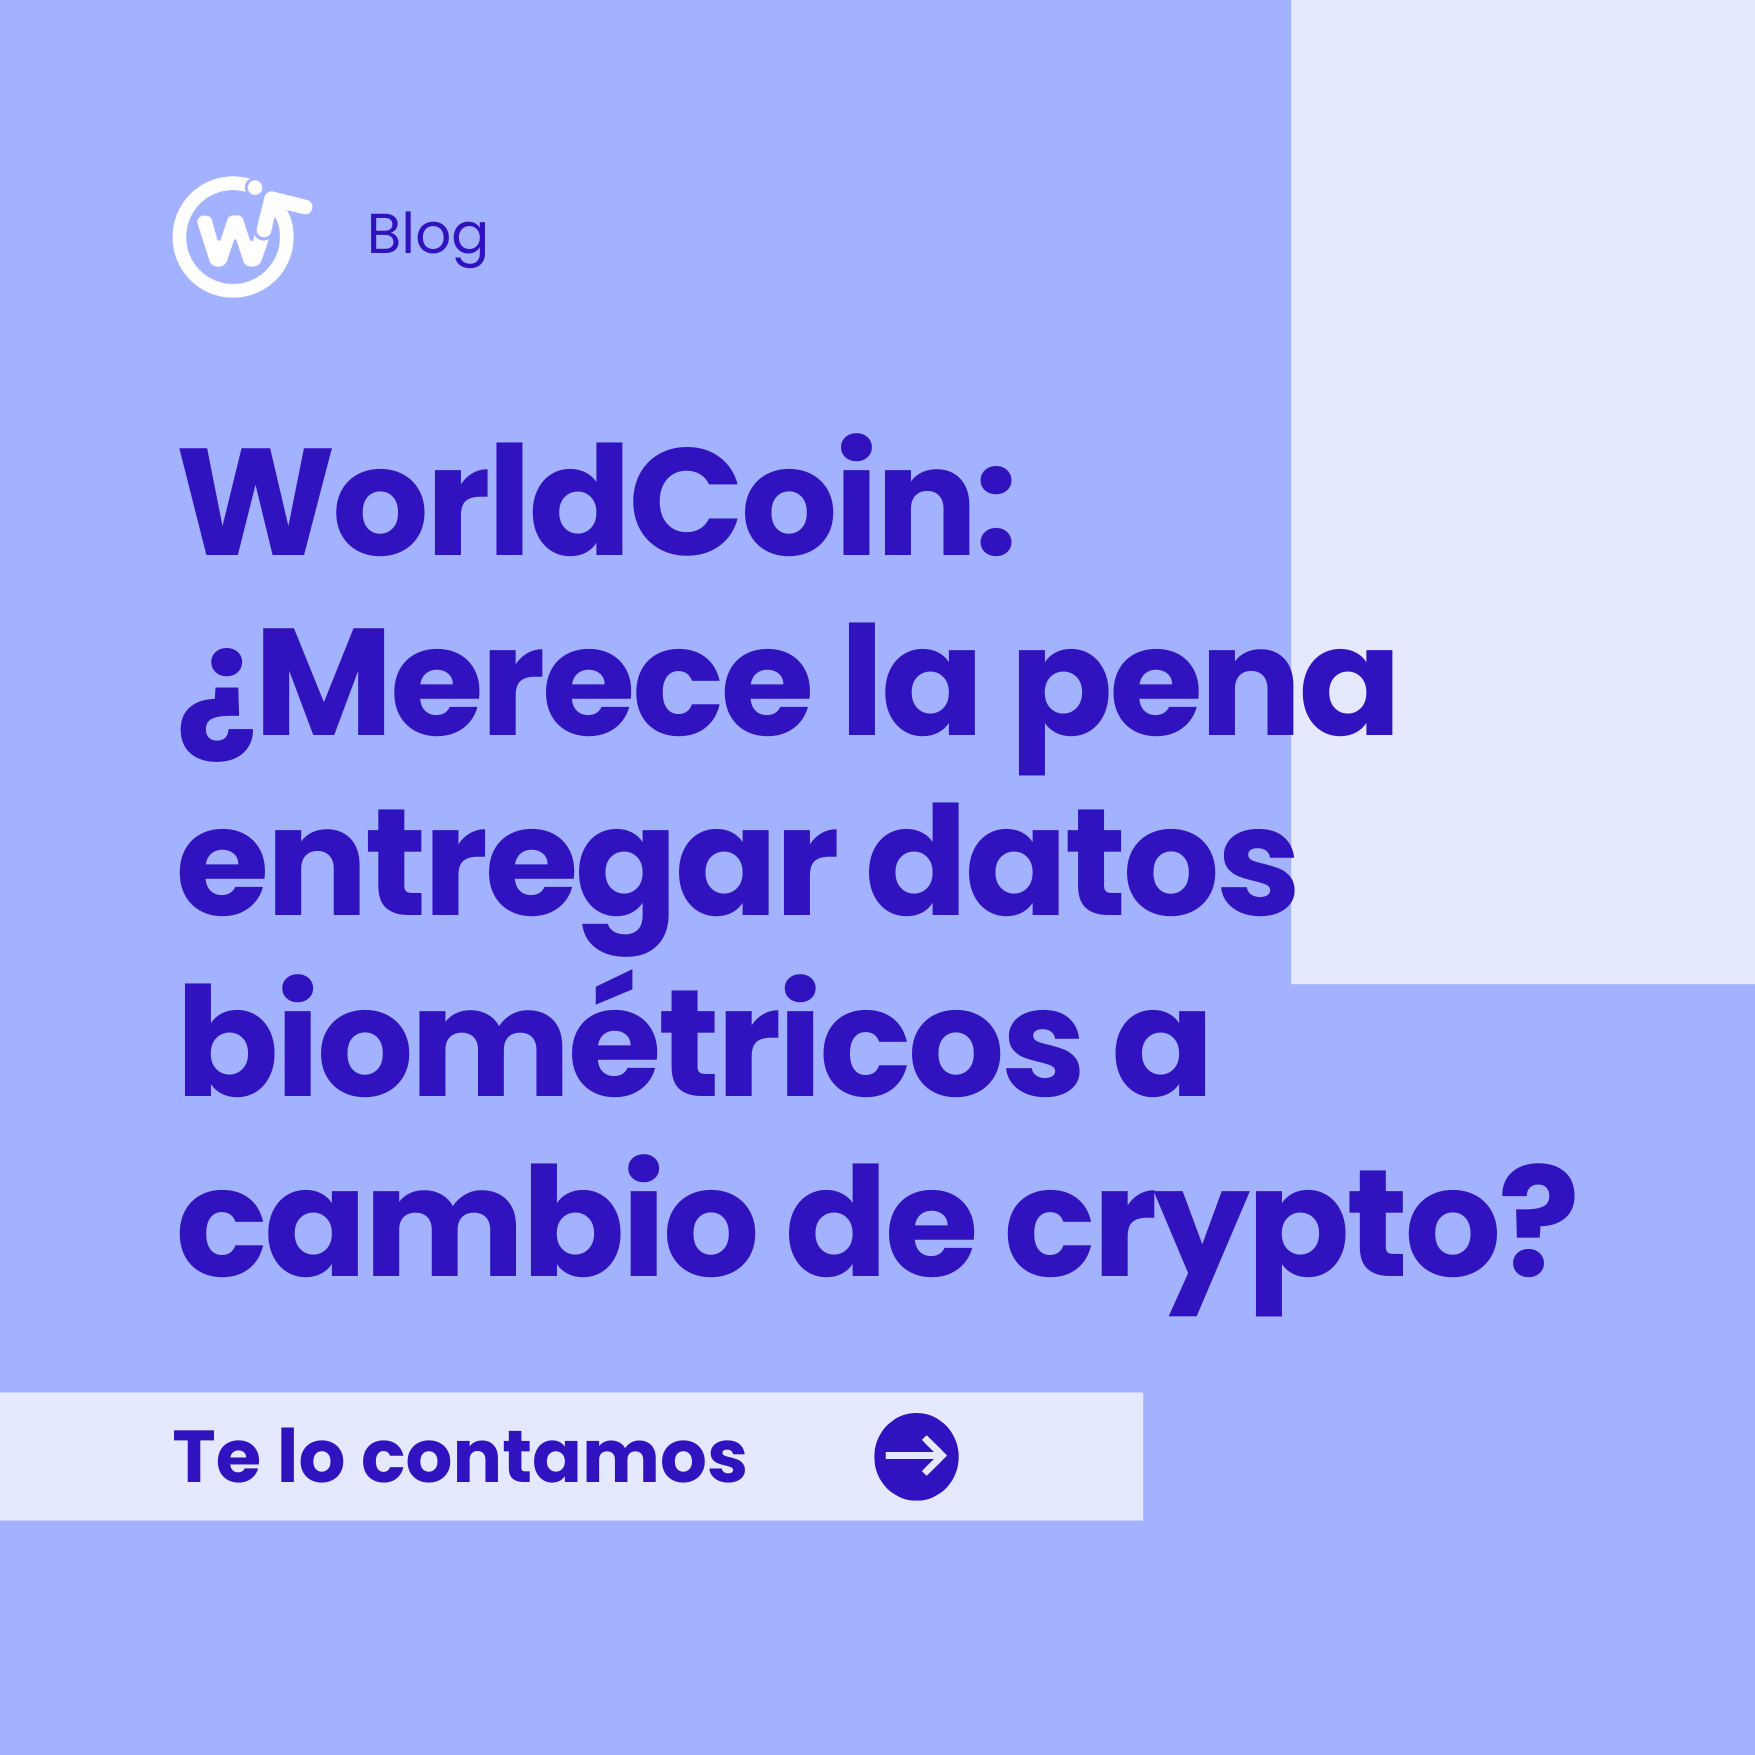 WorldCoin: ¿Merece la pena entregar datos biométricos a cambio de crypto?